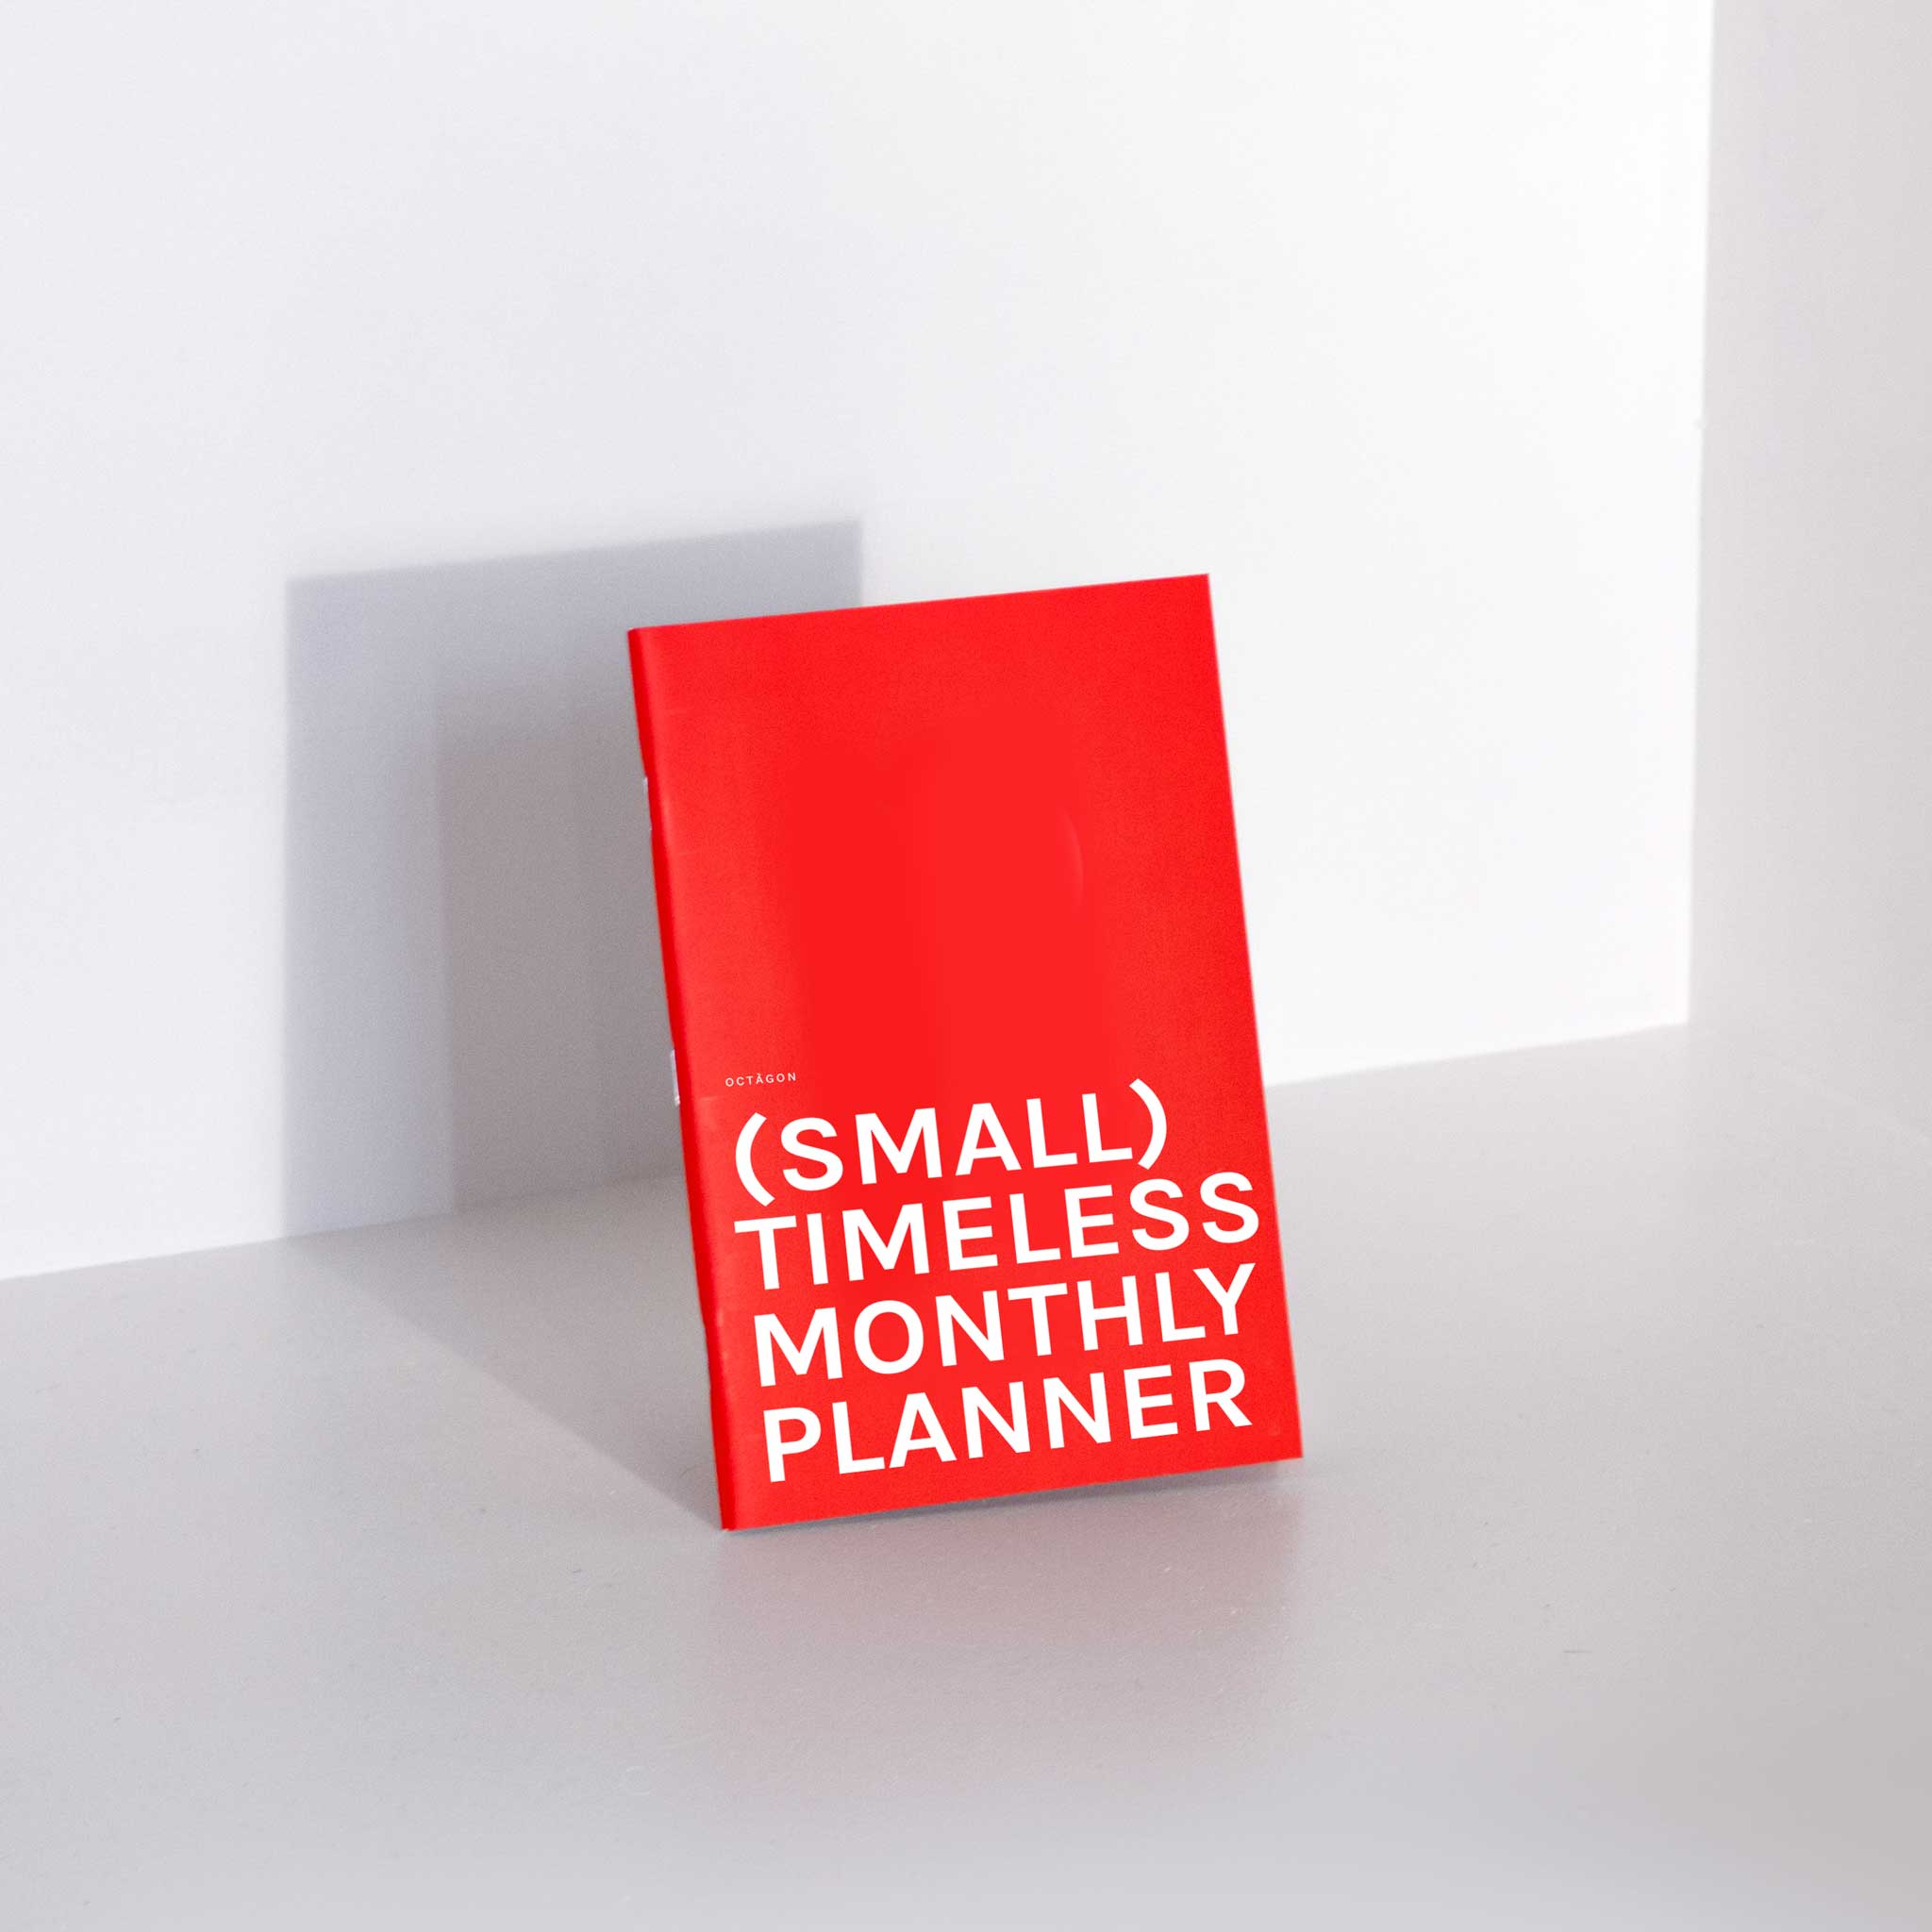 TIMELESS MONTHLY PLANNER | Zeitloser MONATSPLANER | Octàgon Design - Charles & Marie